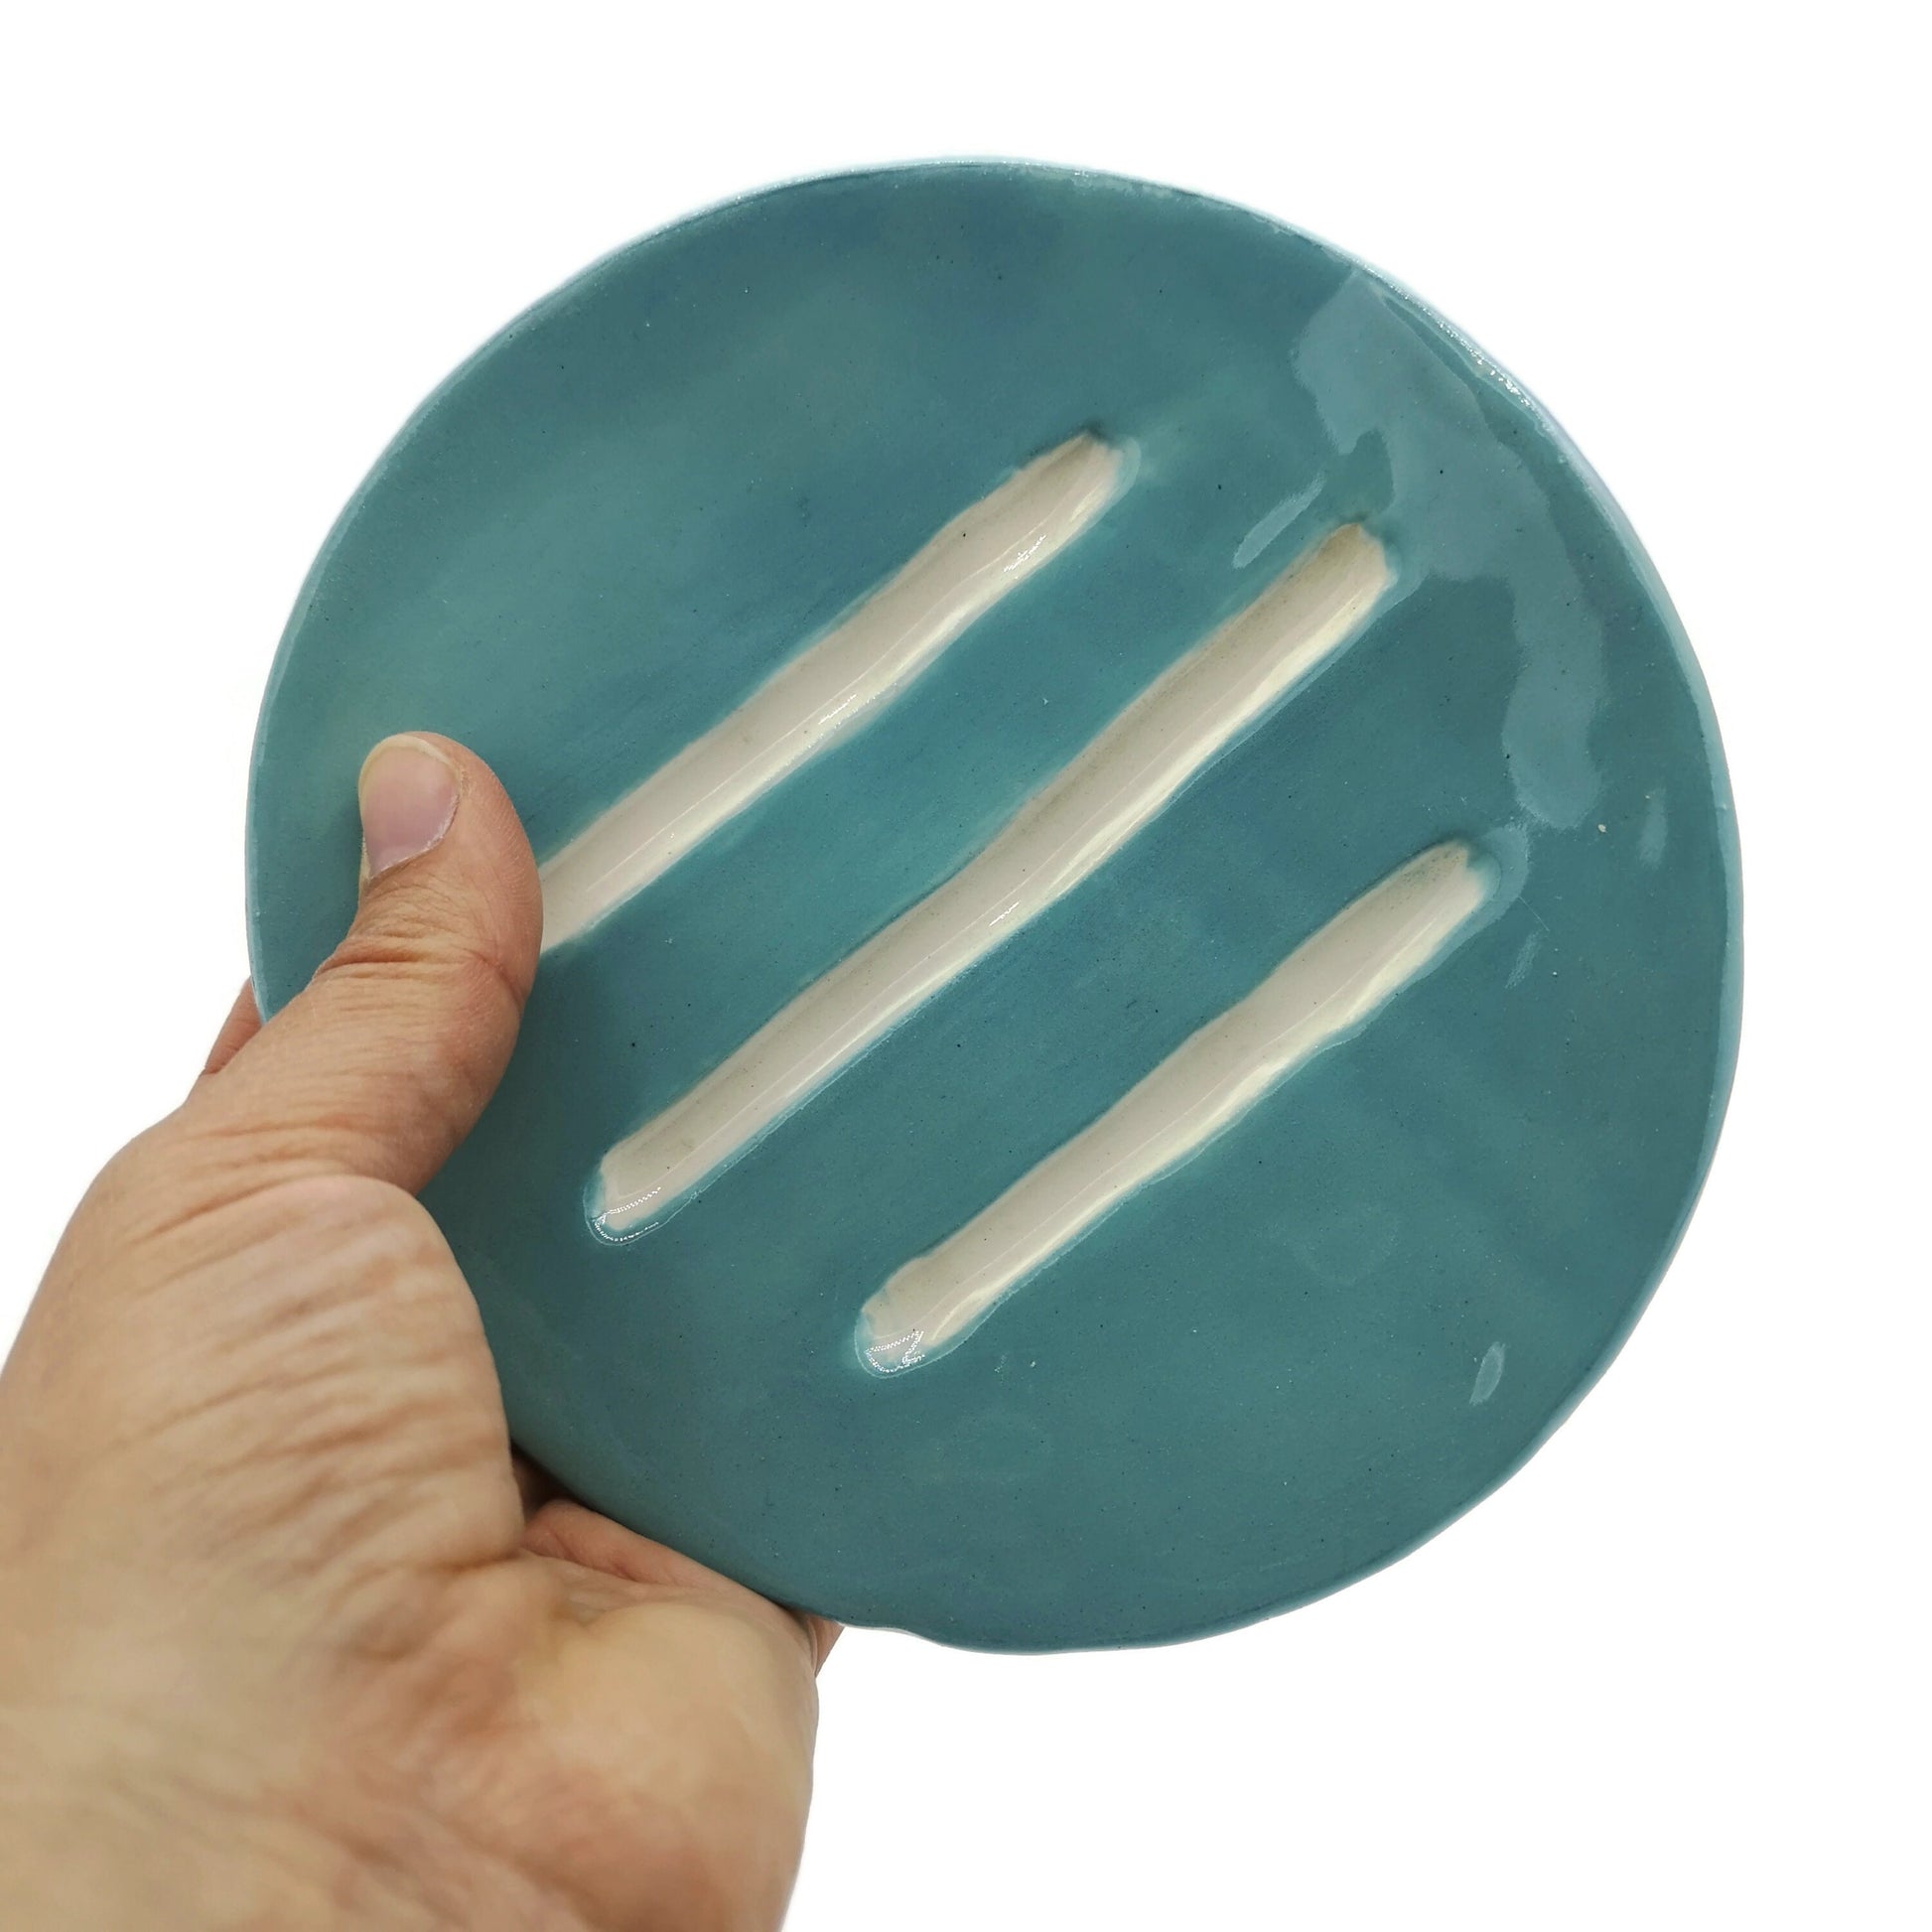 Handmade Ceramic Blue Round Soap Dish With Drain, Draining Soap Bar Holder, Clay Tray, Sustainable Bathroom Accessories - Ceramica Ana Rafael